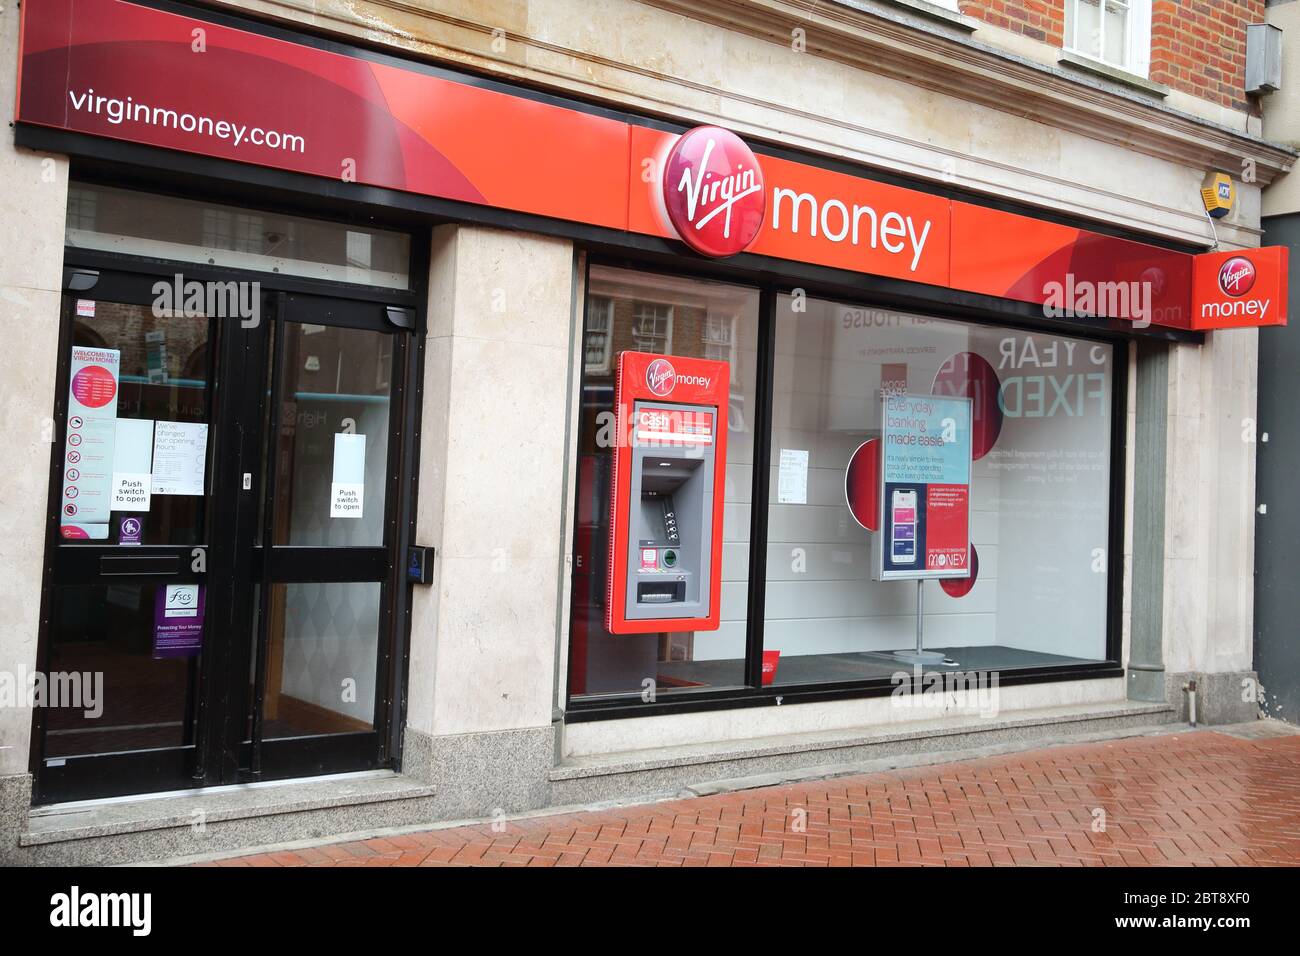 Virgin Money branch in Reading, UK Stock Photo